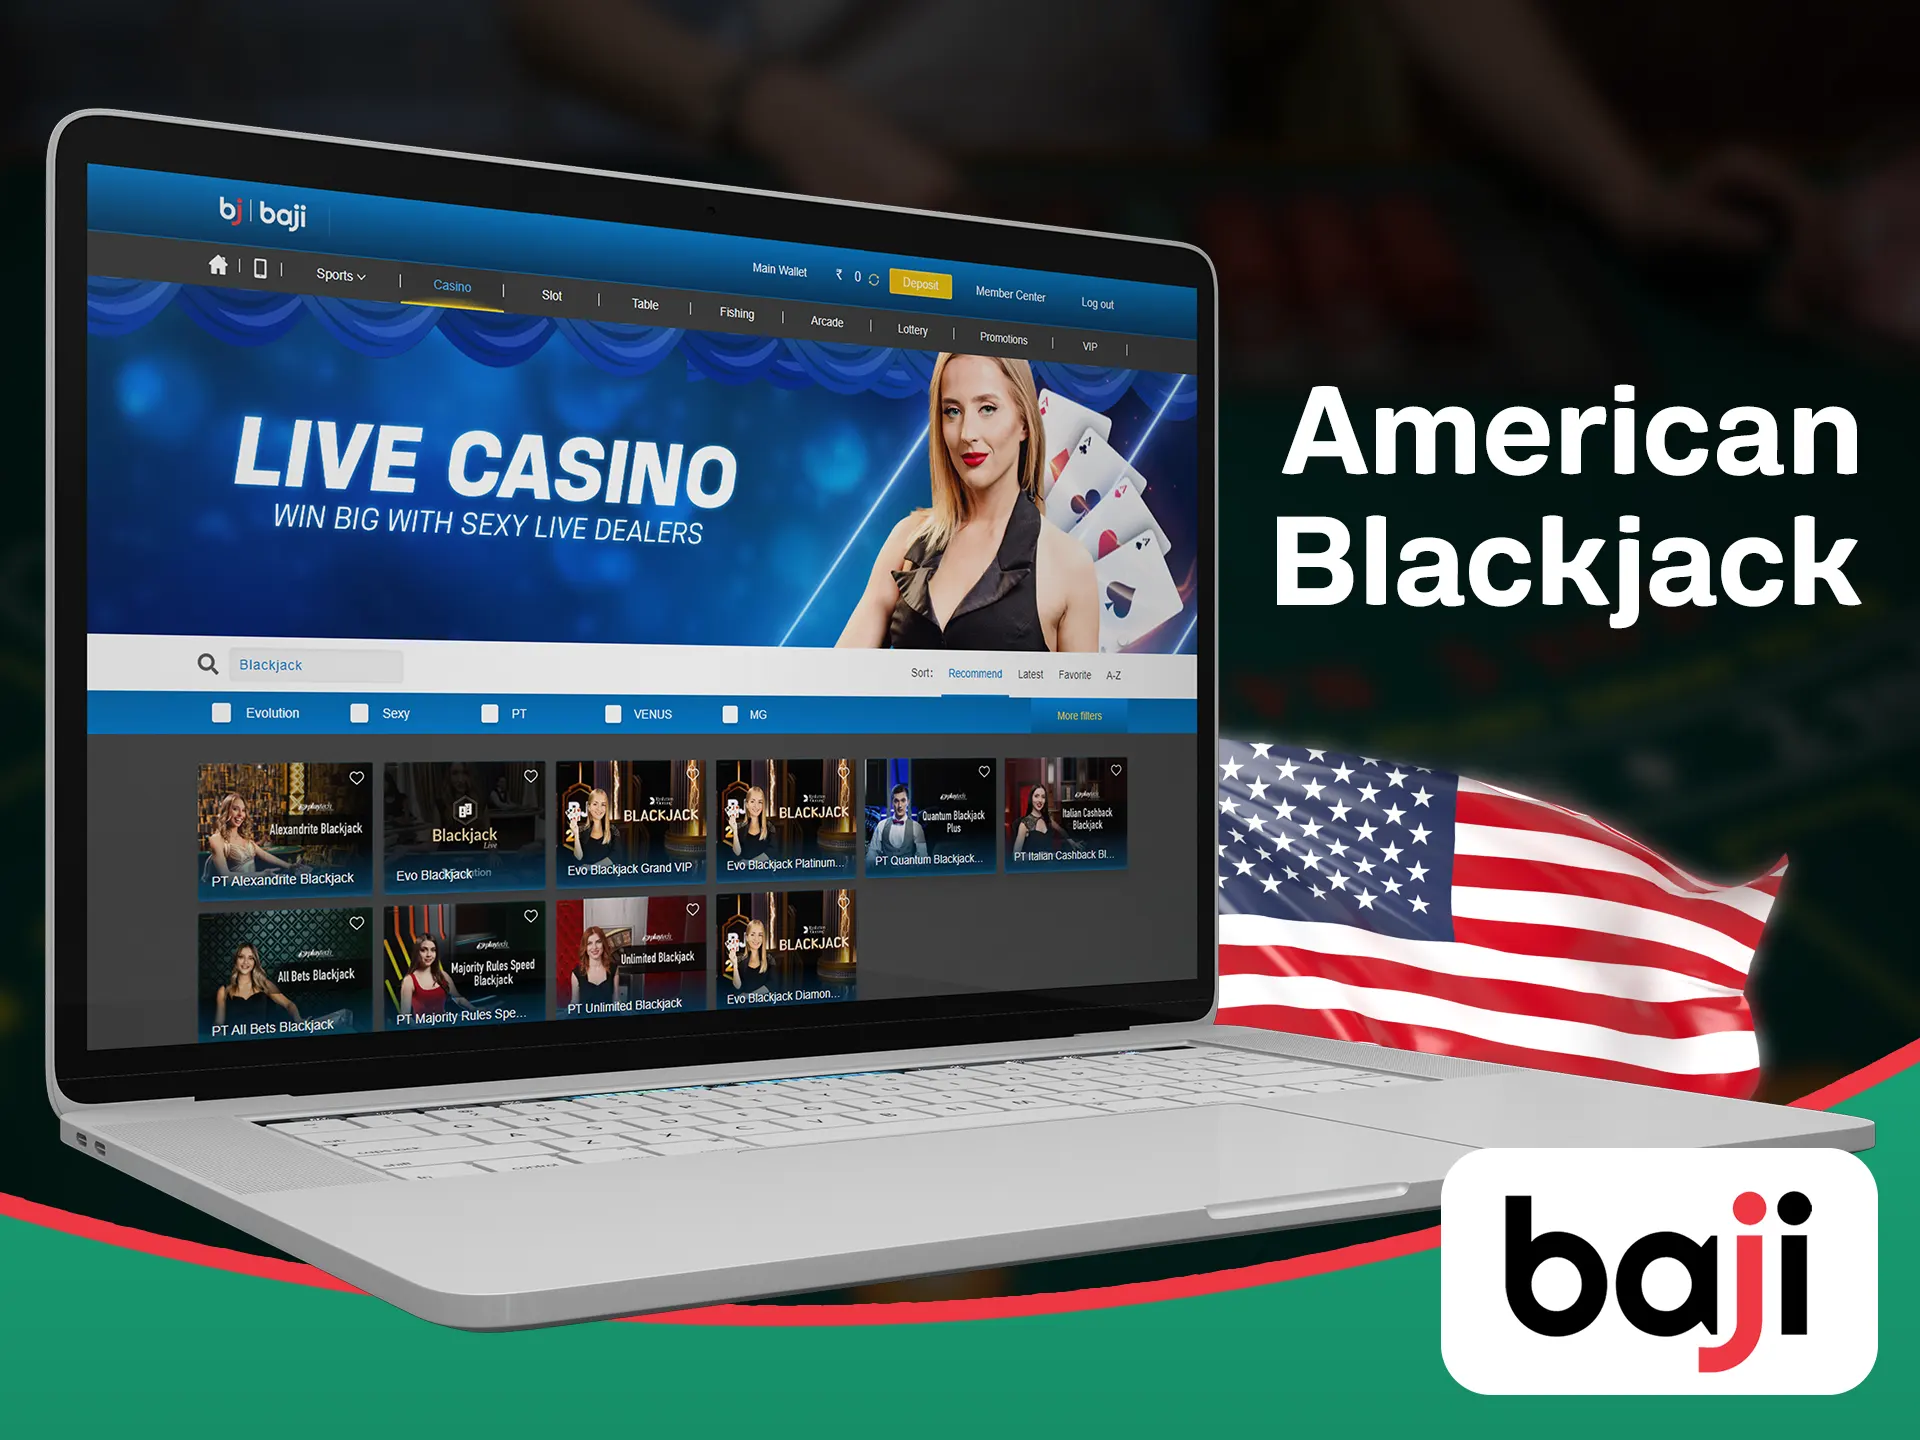 American blackjack is one of the best types of blackjack at the Baji casino.